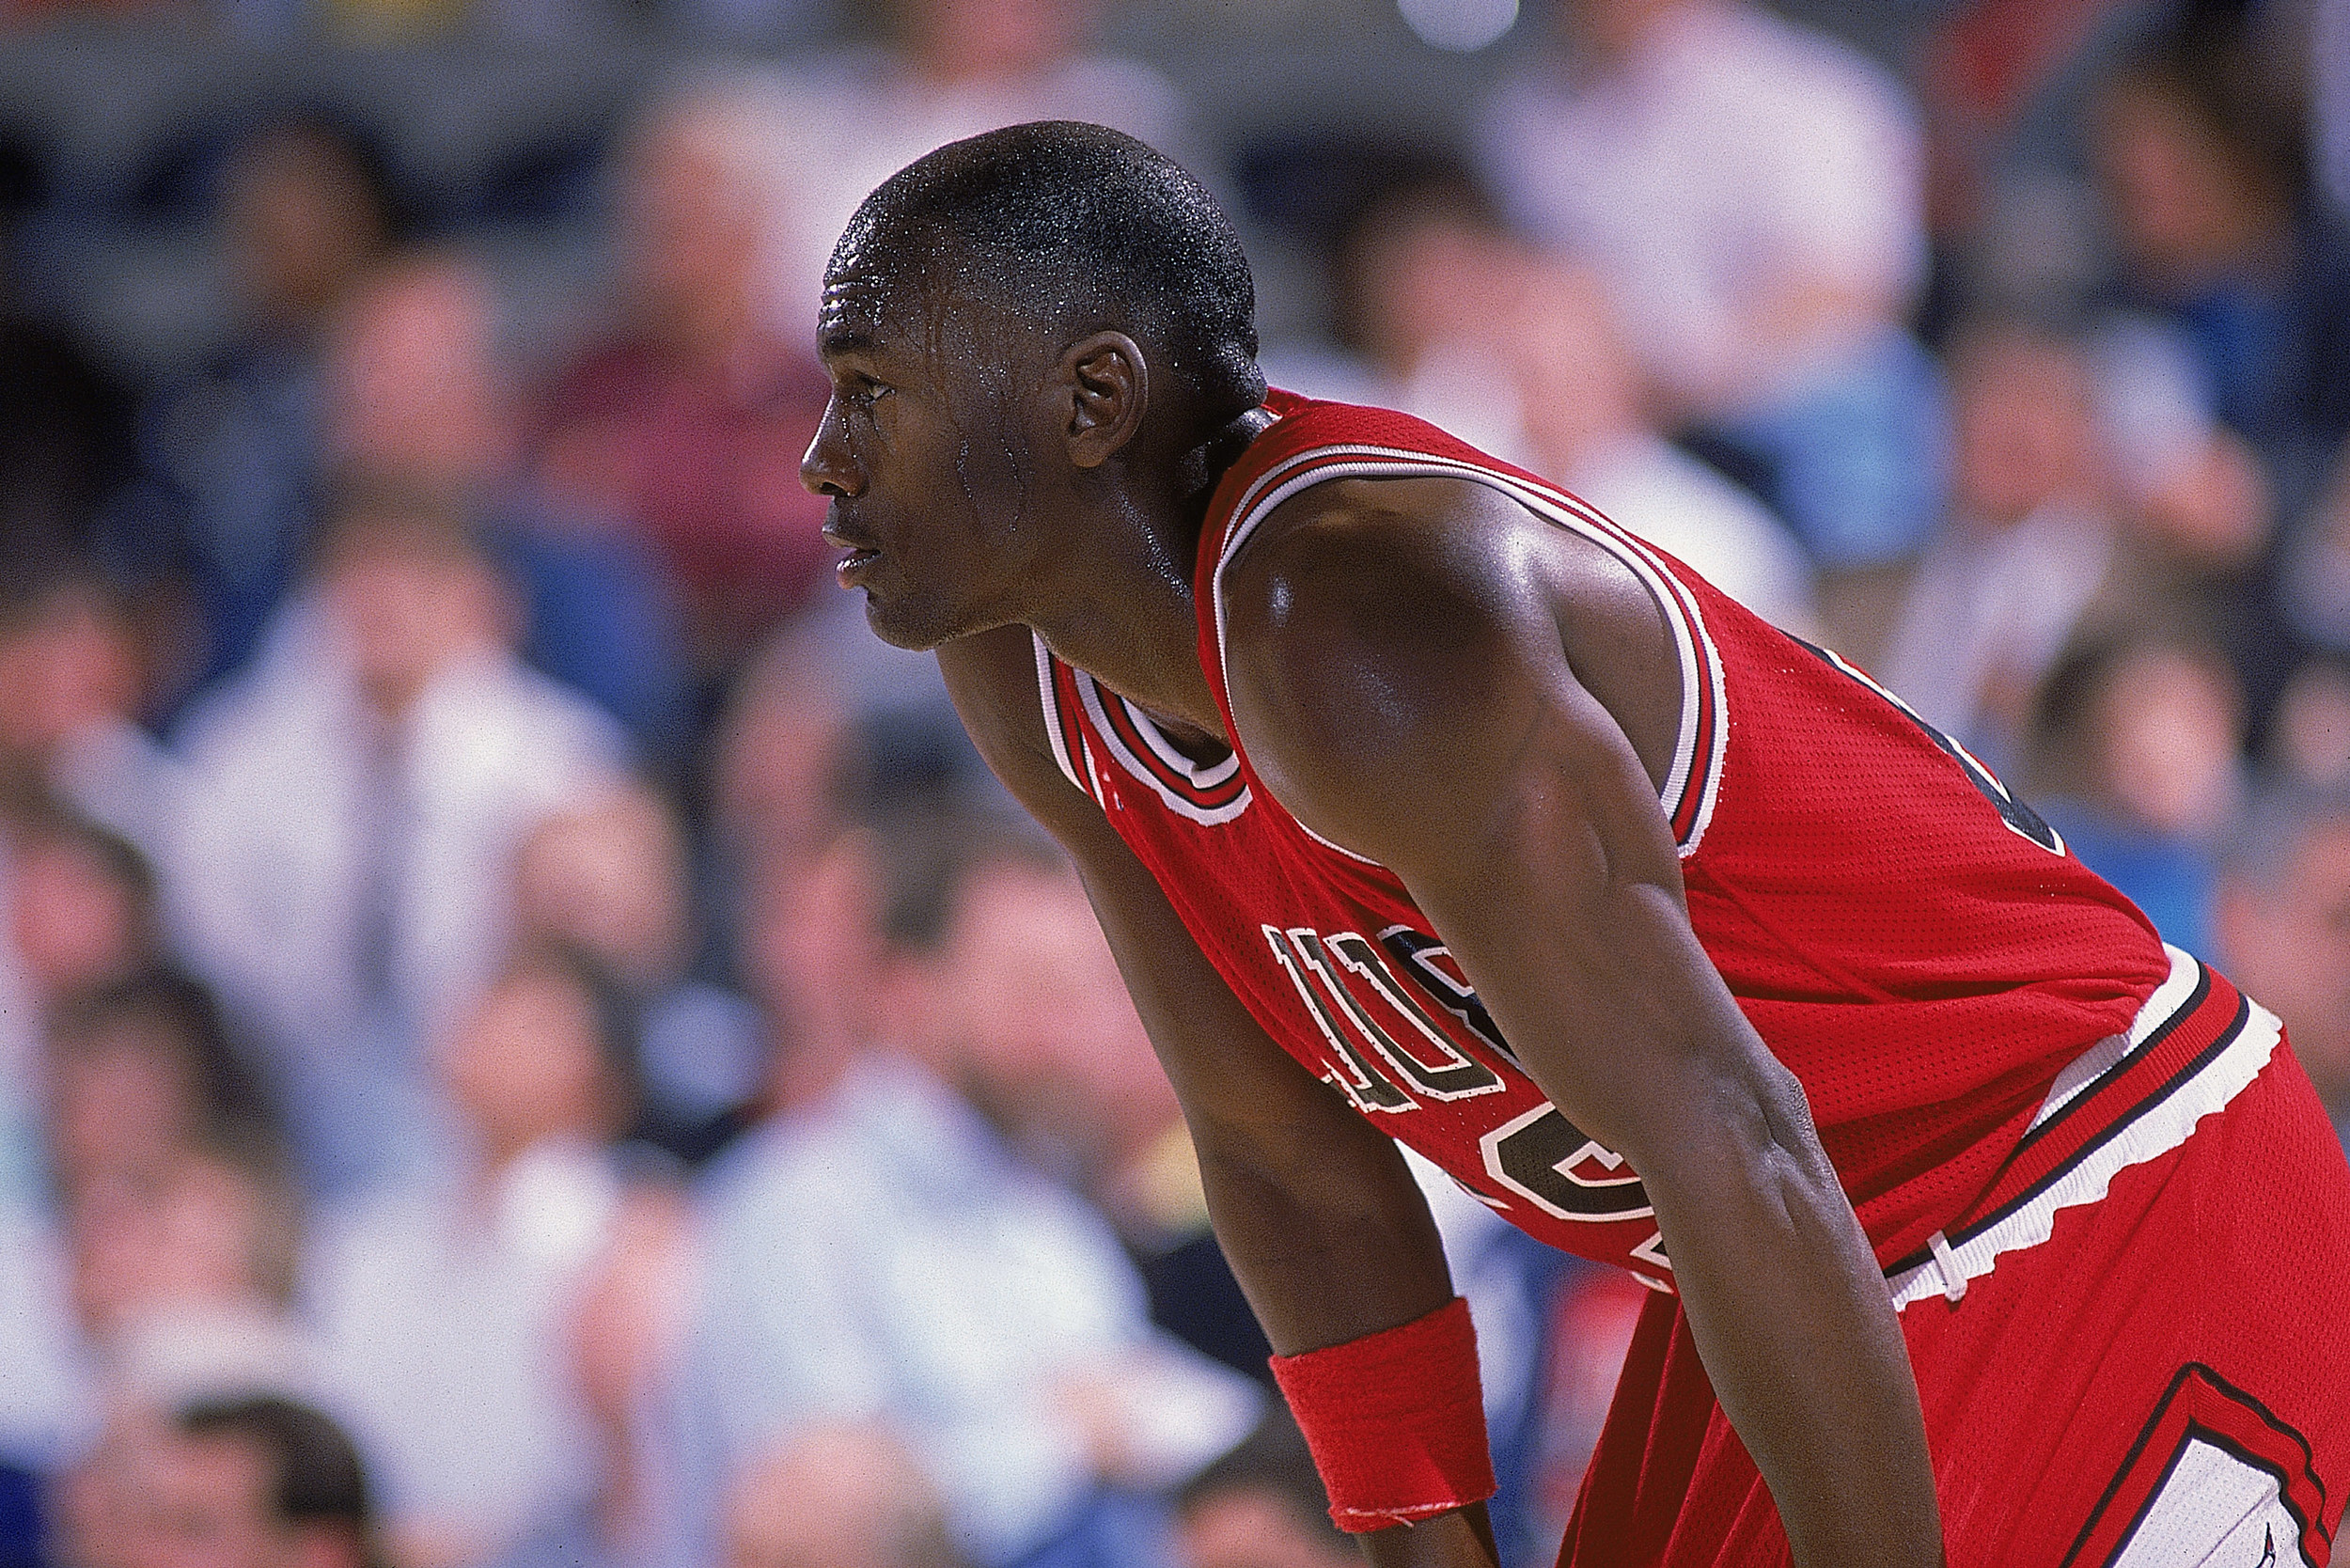 Ticket stub to Michael Jordan's Chicago Bulls debut sold at